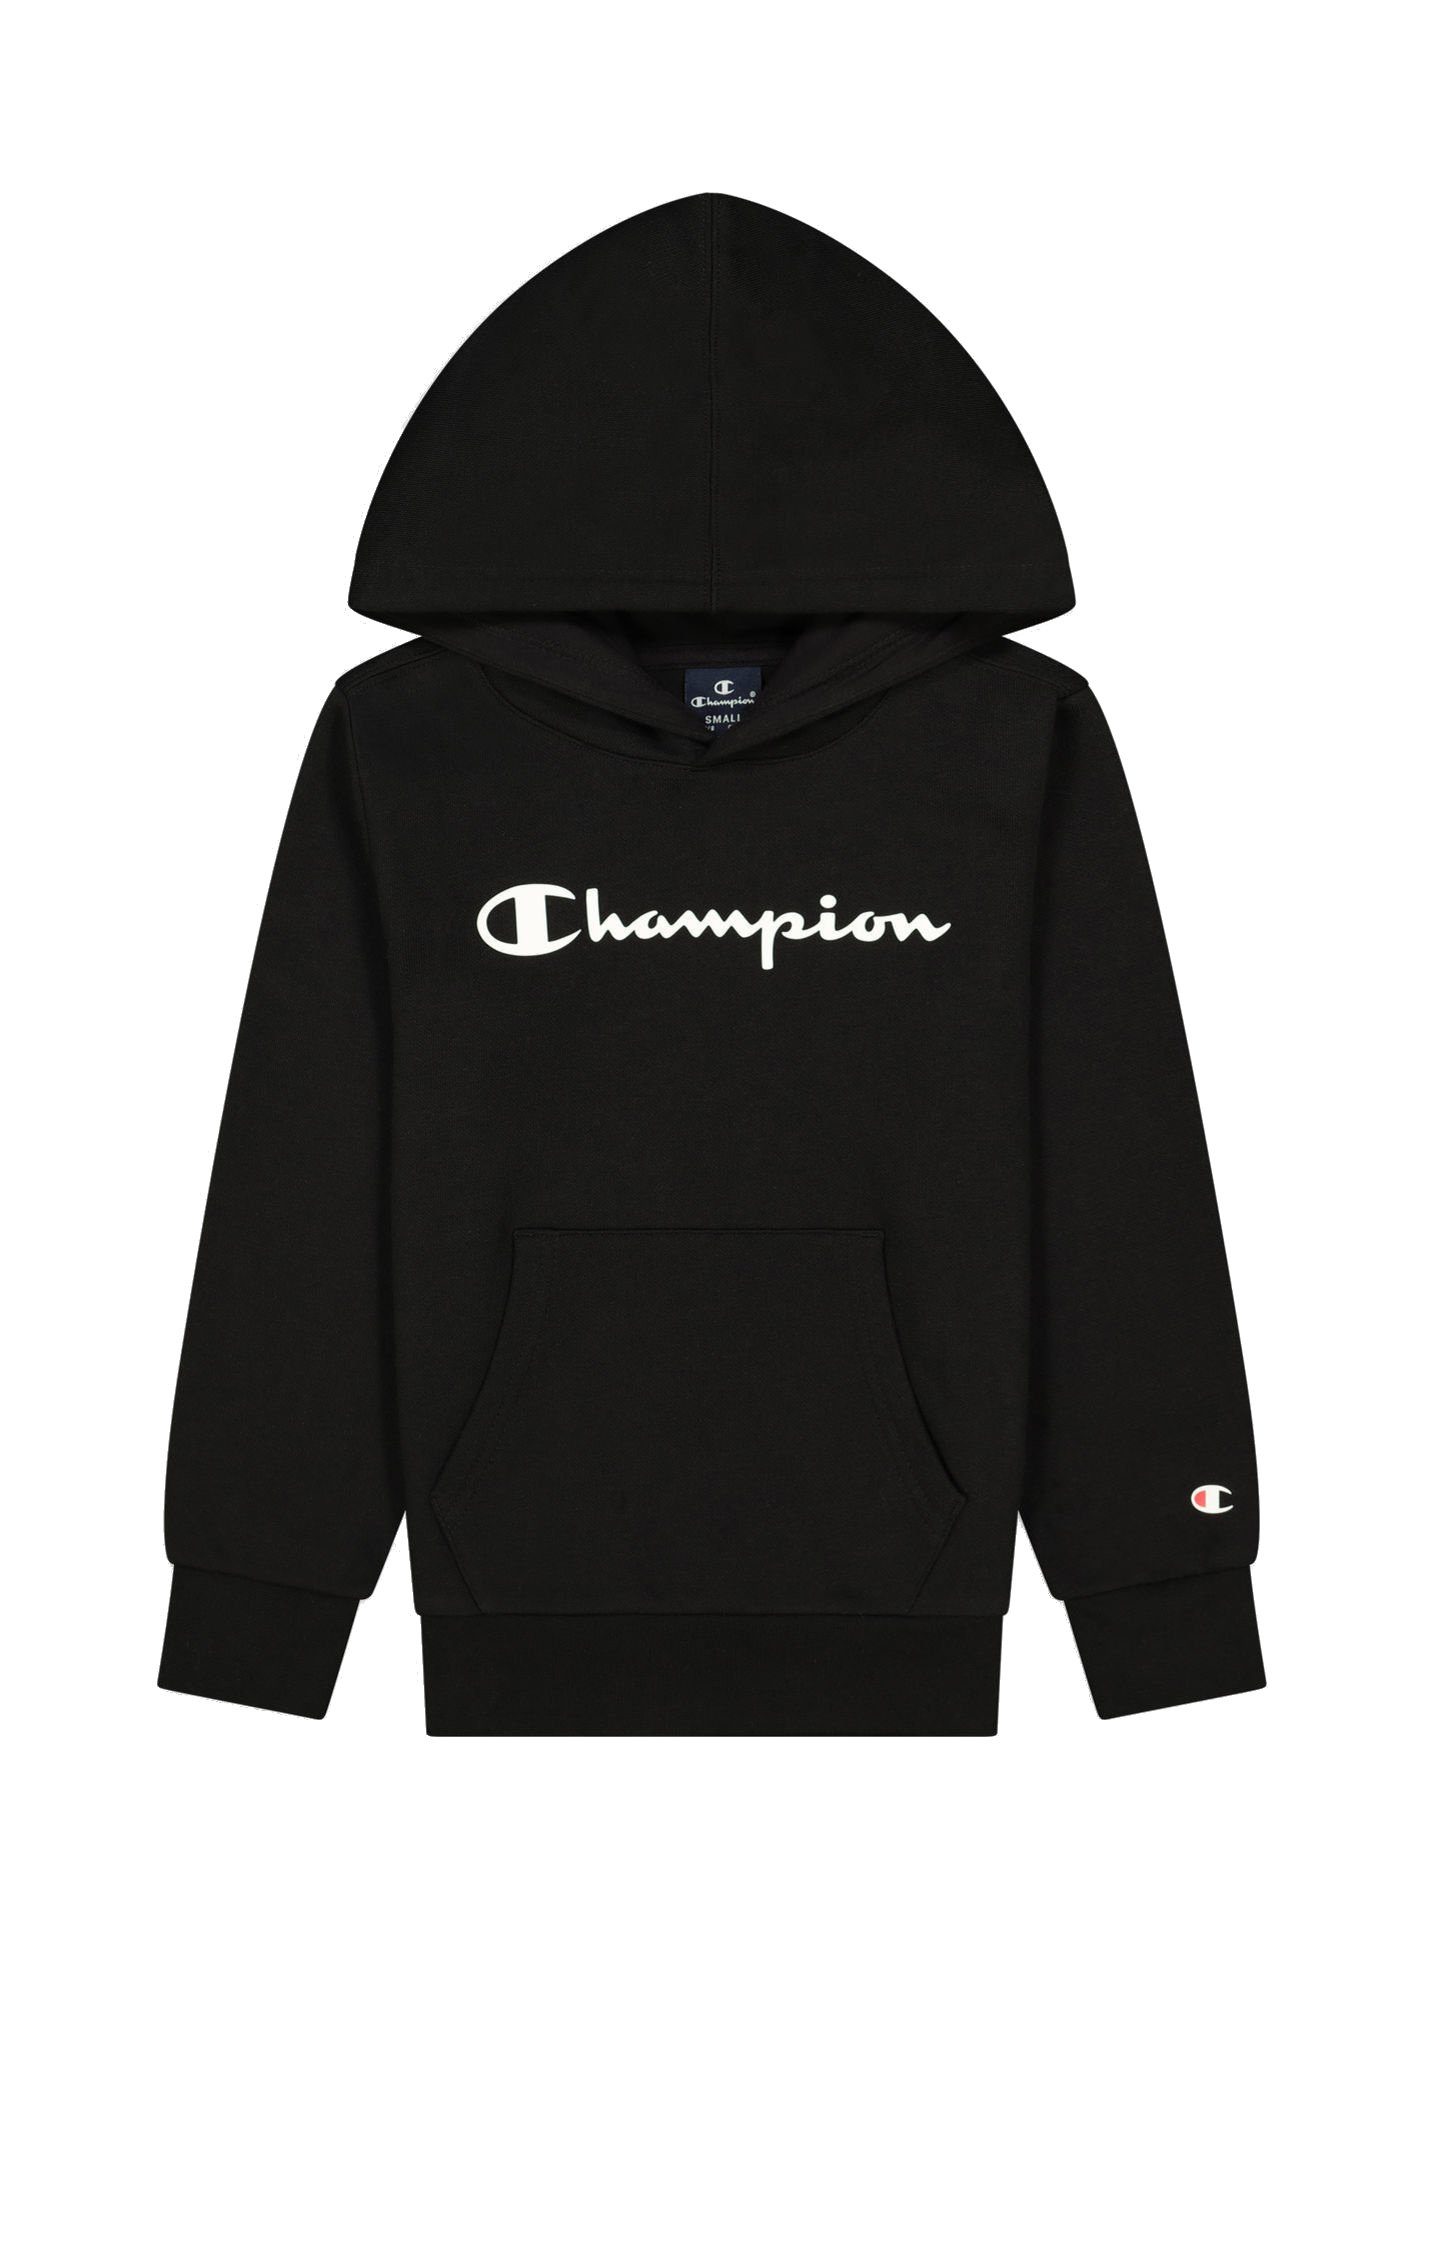 (nbk) Hoodie Champion Kapuzenpullover Champion Kinder schwarz Hooded Sweatshirt 305358